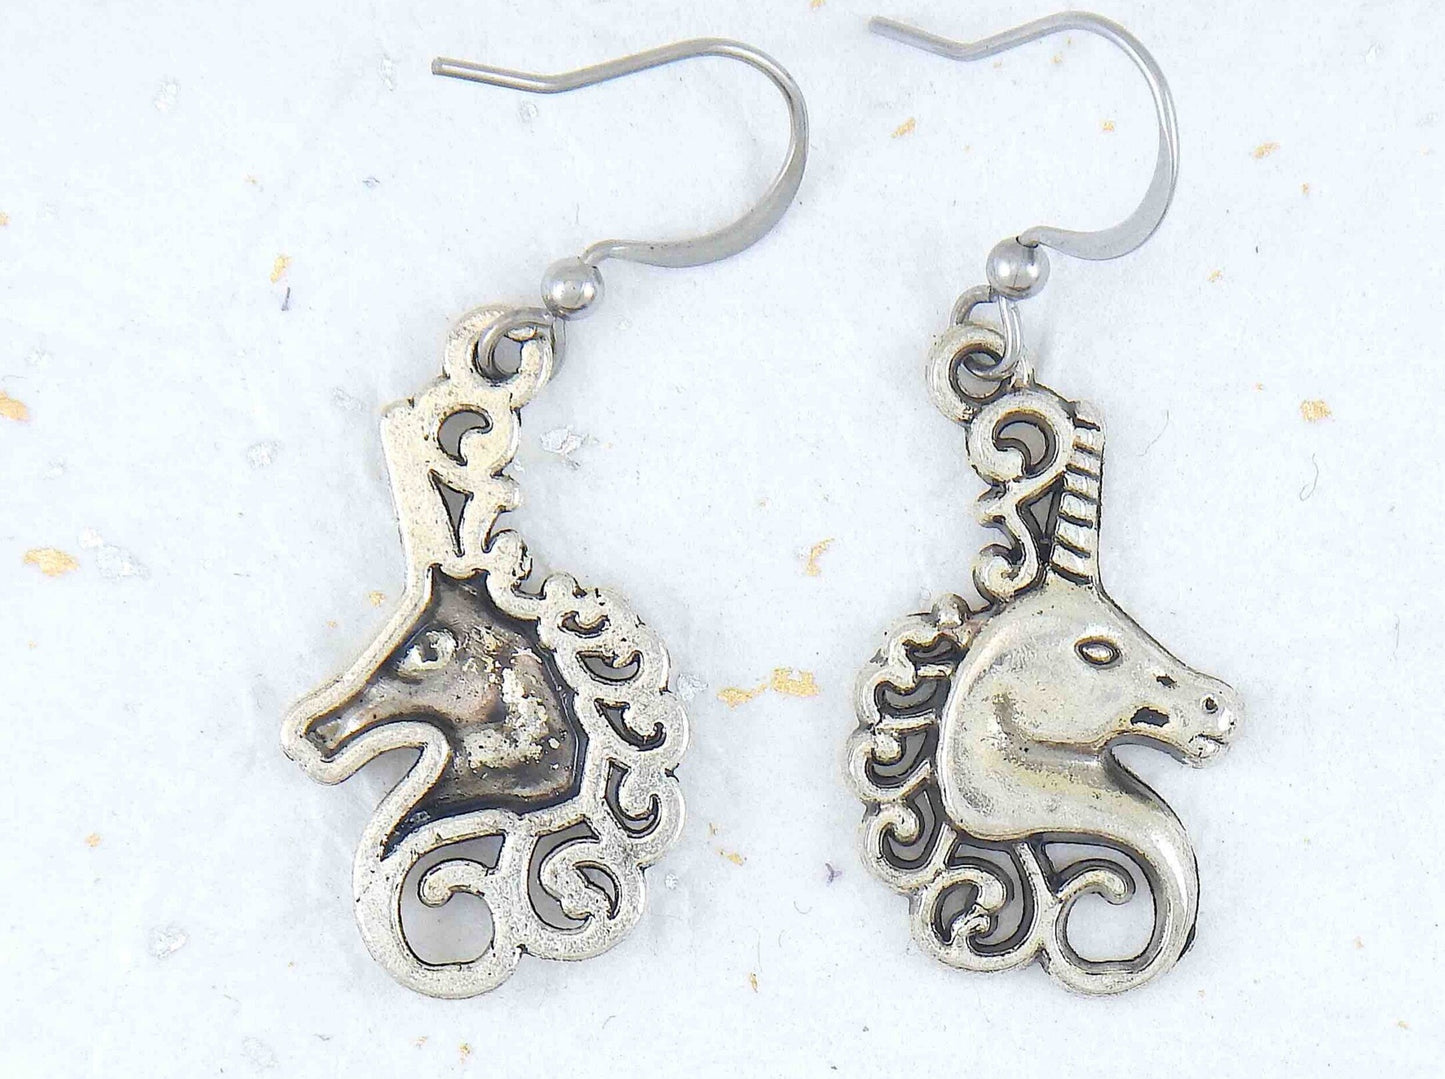 Short earrings with pewter unicorn heads, stainless steel hooks